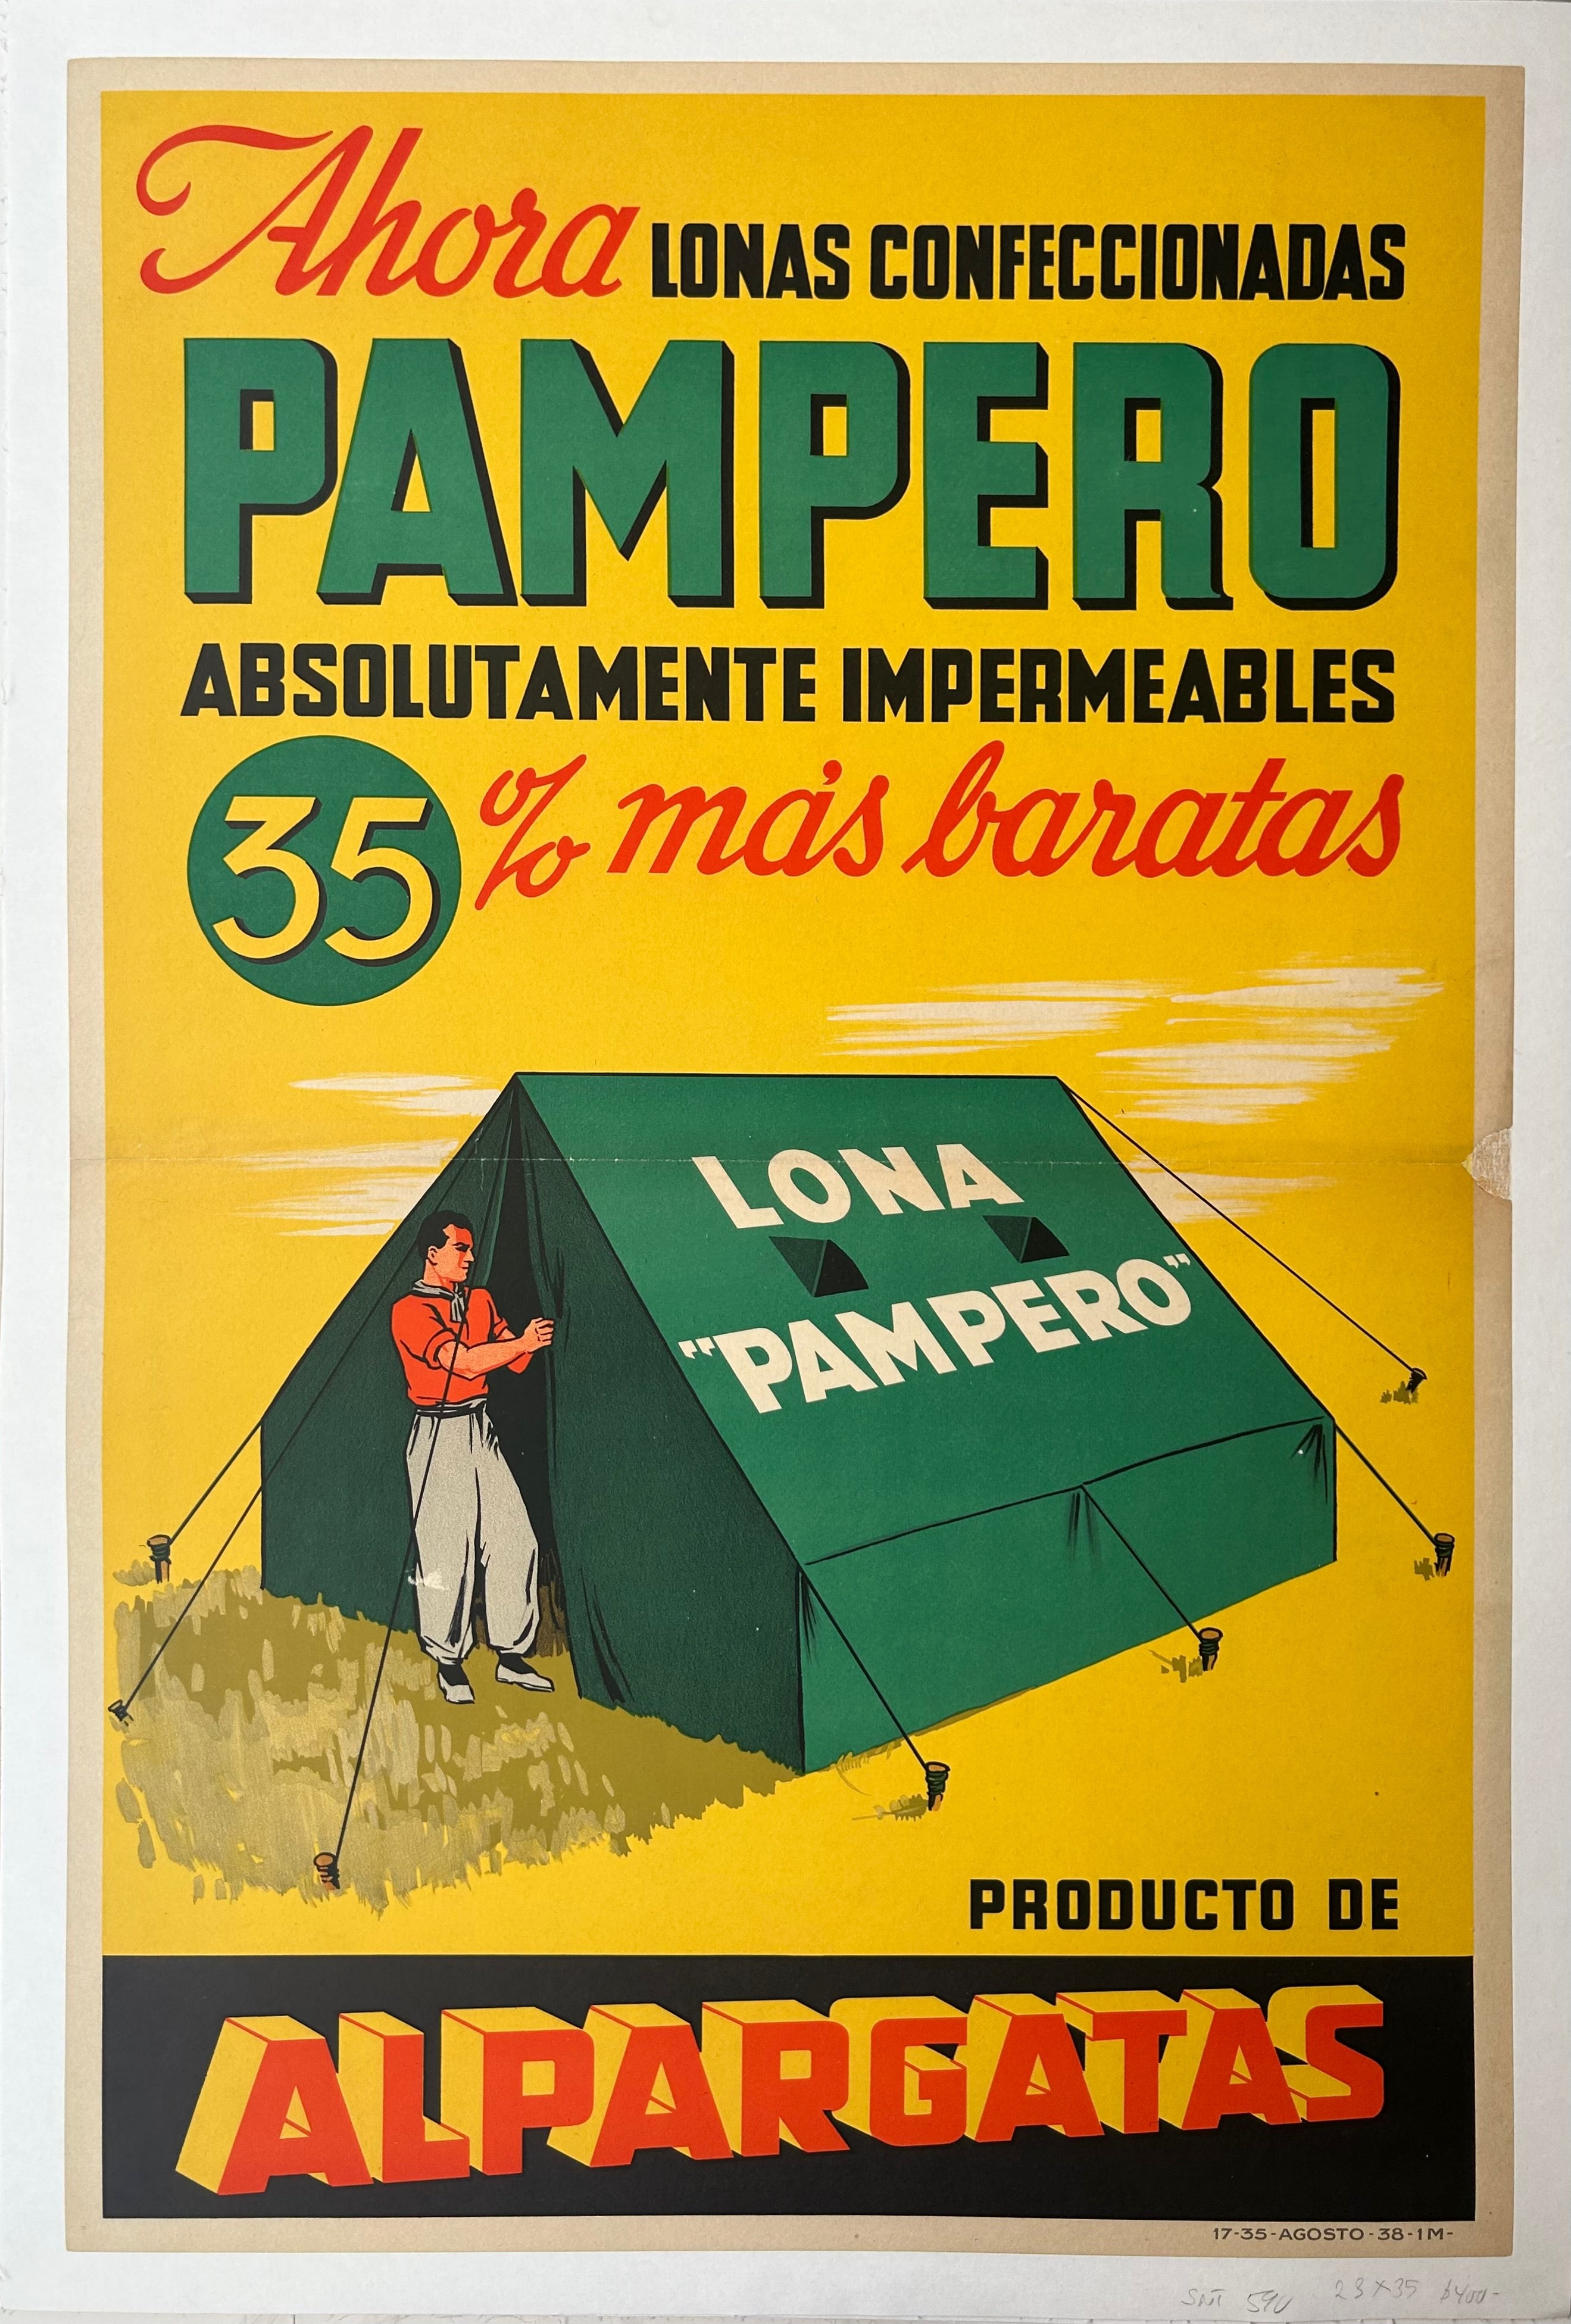 Pampero Advertisement Poster